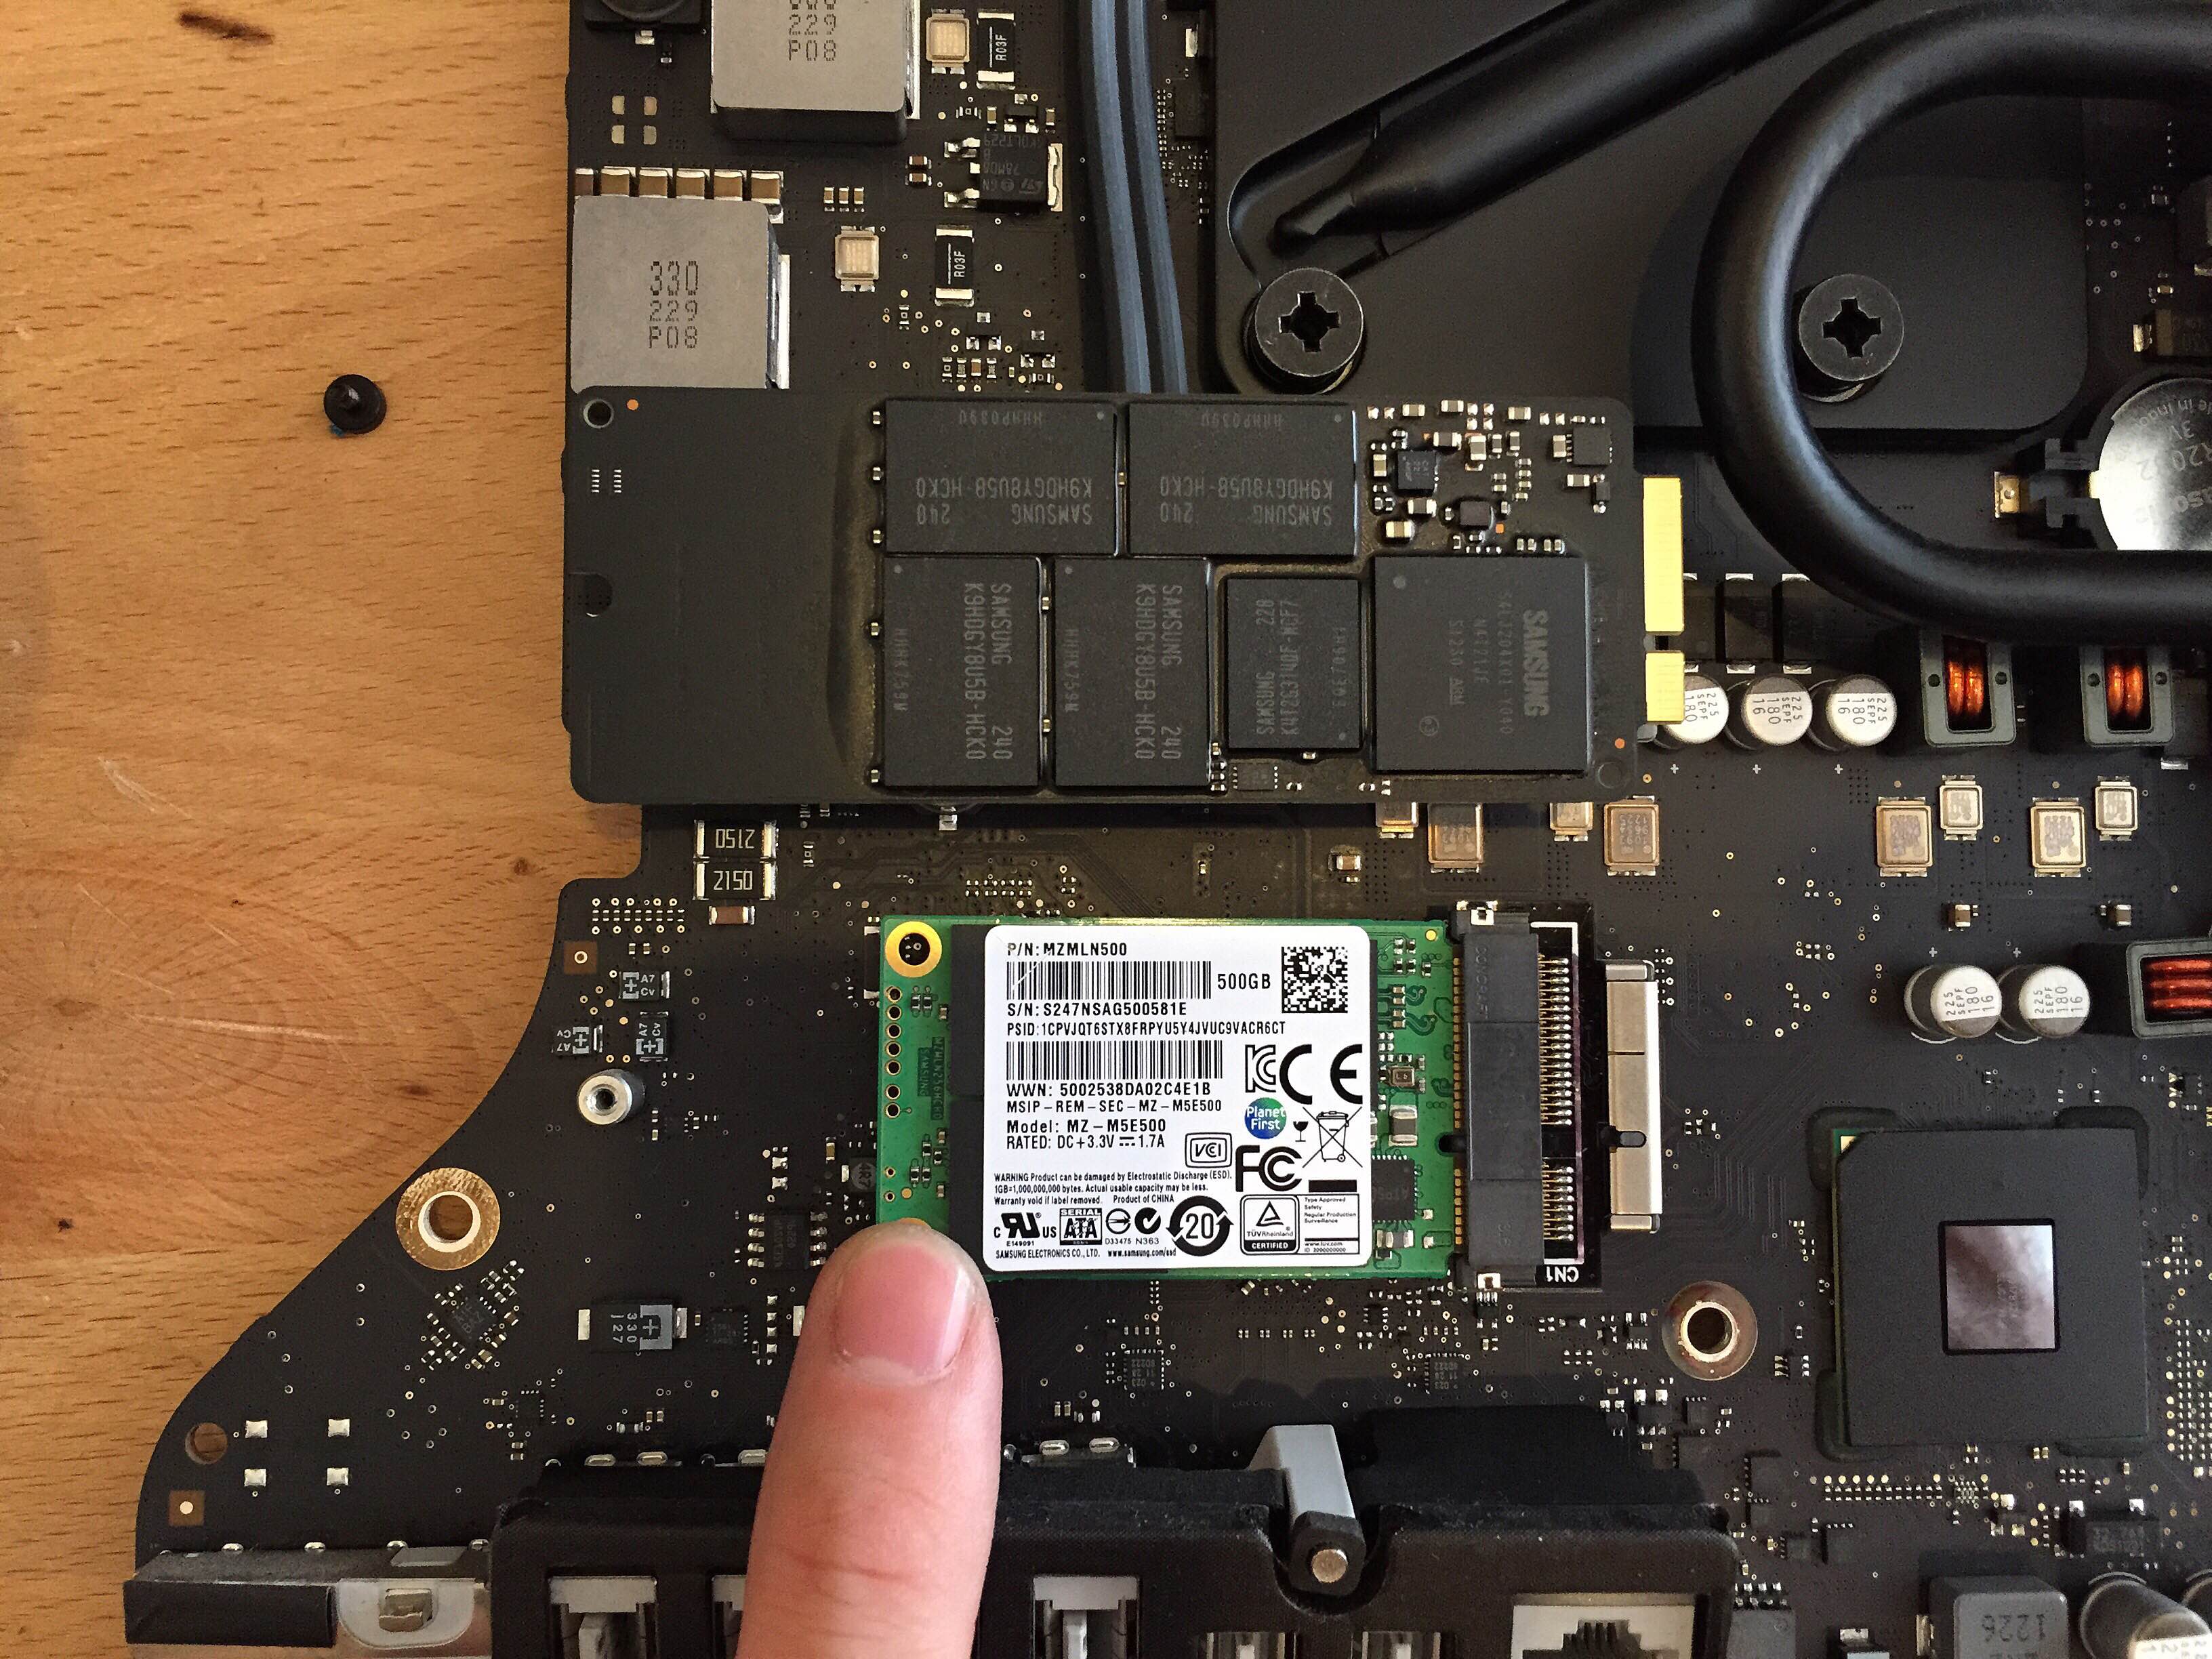 misundelse Forbindelse Hammer Installing SSD on iMac iMac, 27 inch, late 2012 3.4ghz | MacRumors Forums